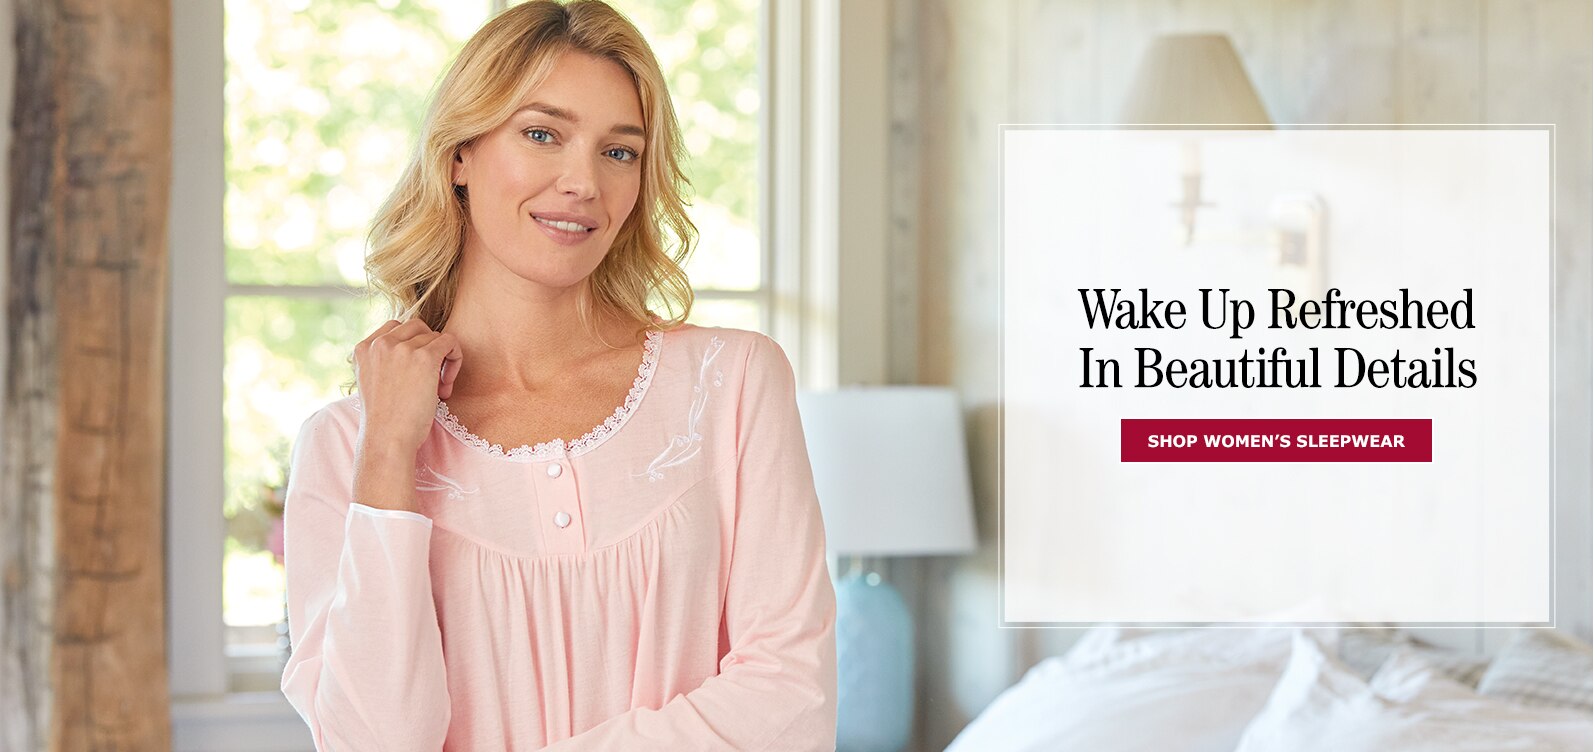 Wake Up Refreshed in Beautiful Details. Shop Women's Sleepwear